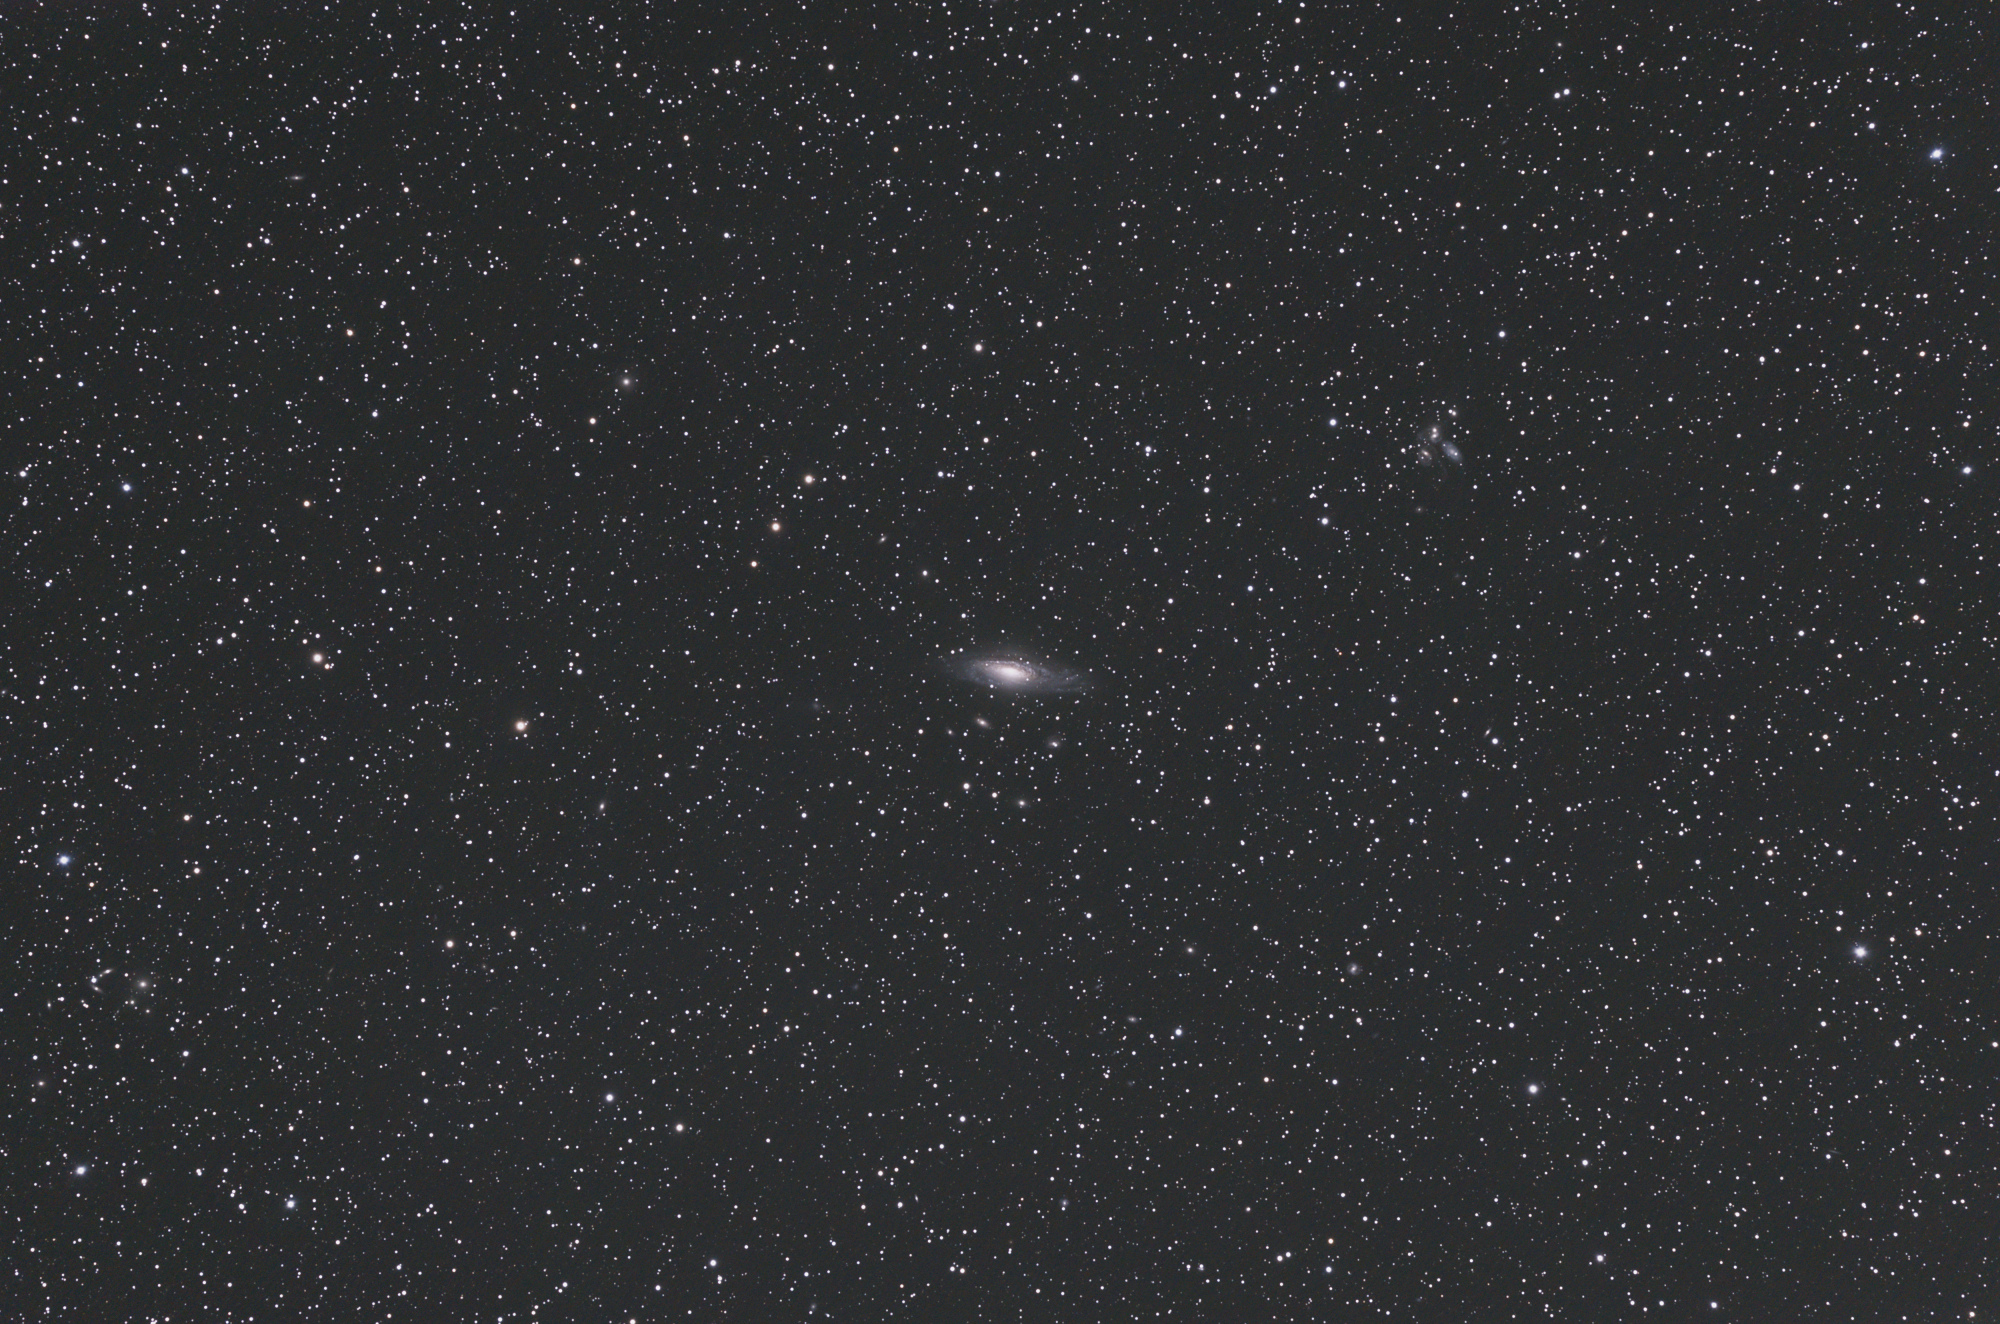 NGC_7331-17-20-2-FINAL-4.jpg